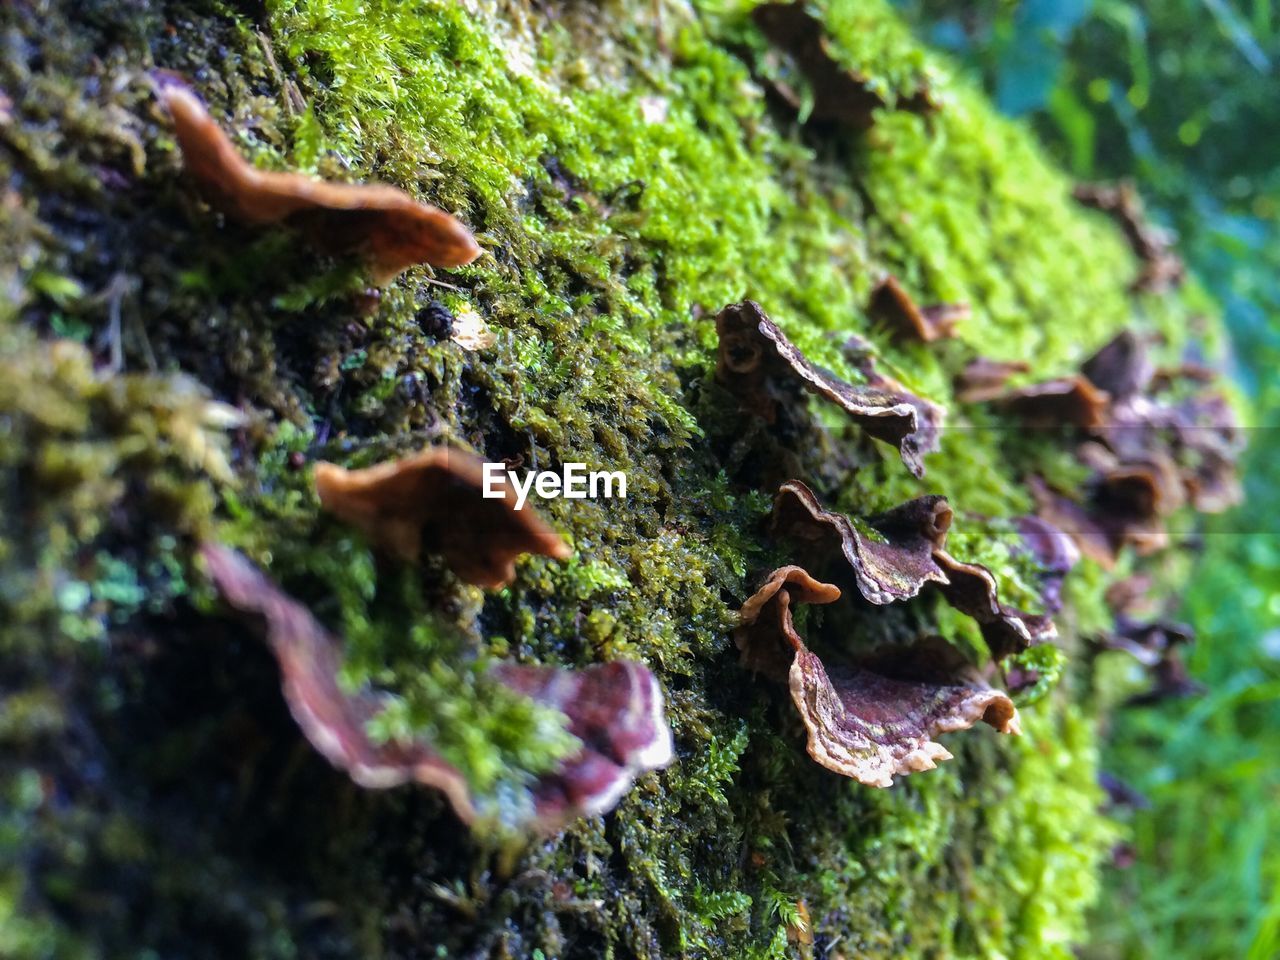 Close up of bracket fungus